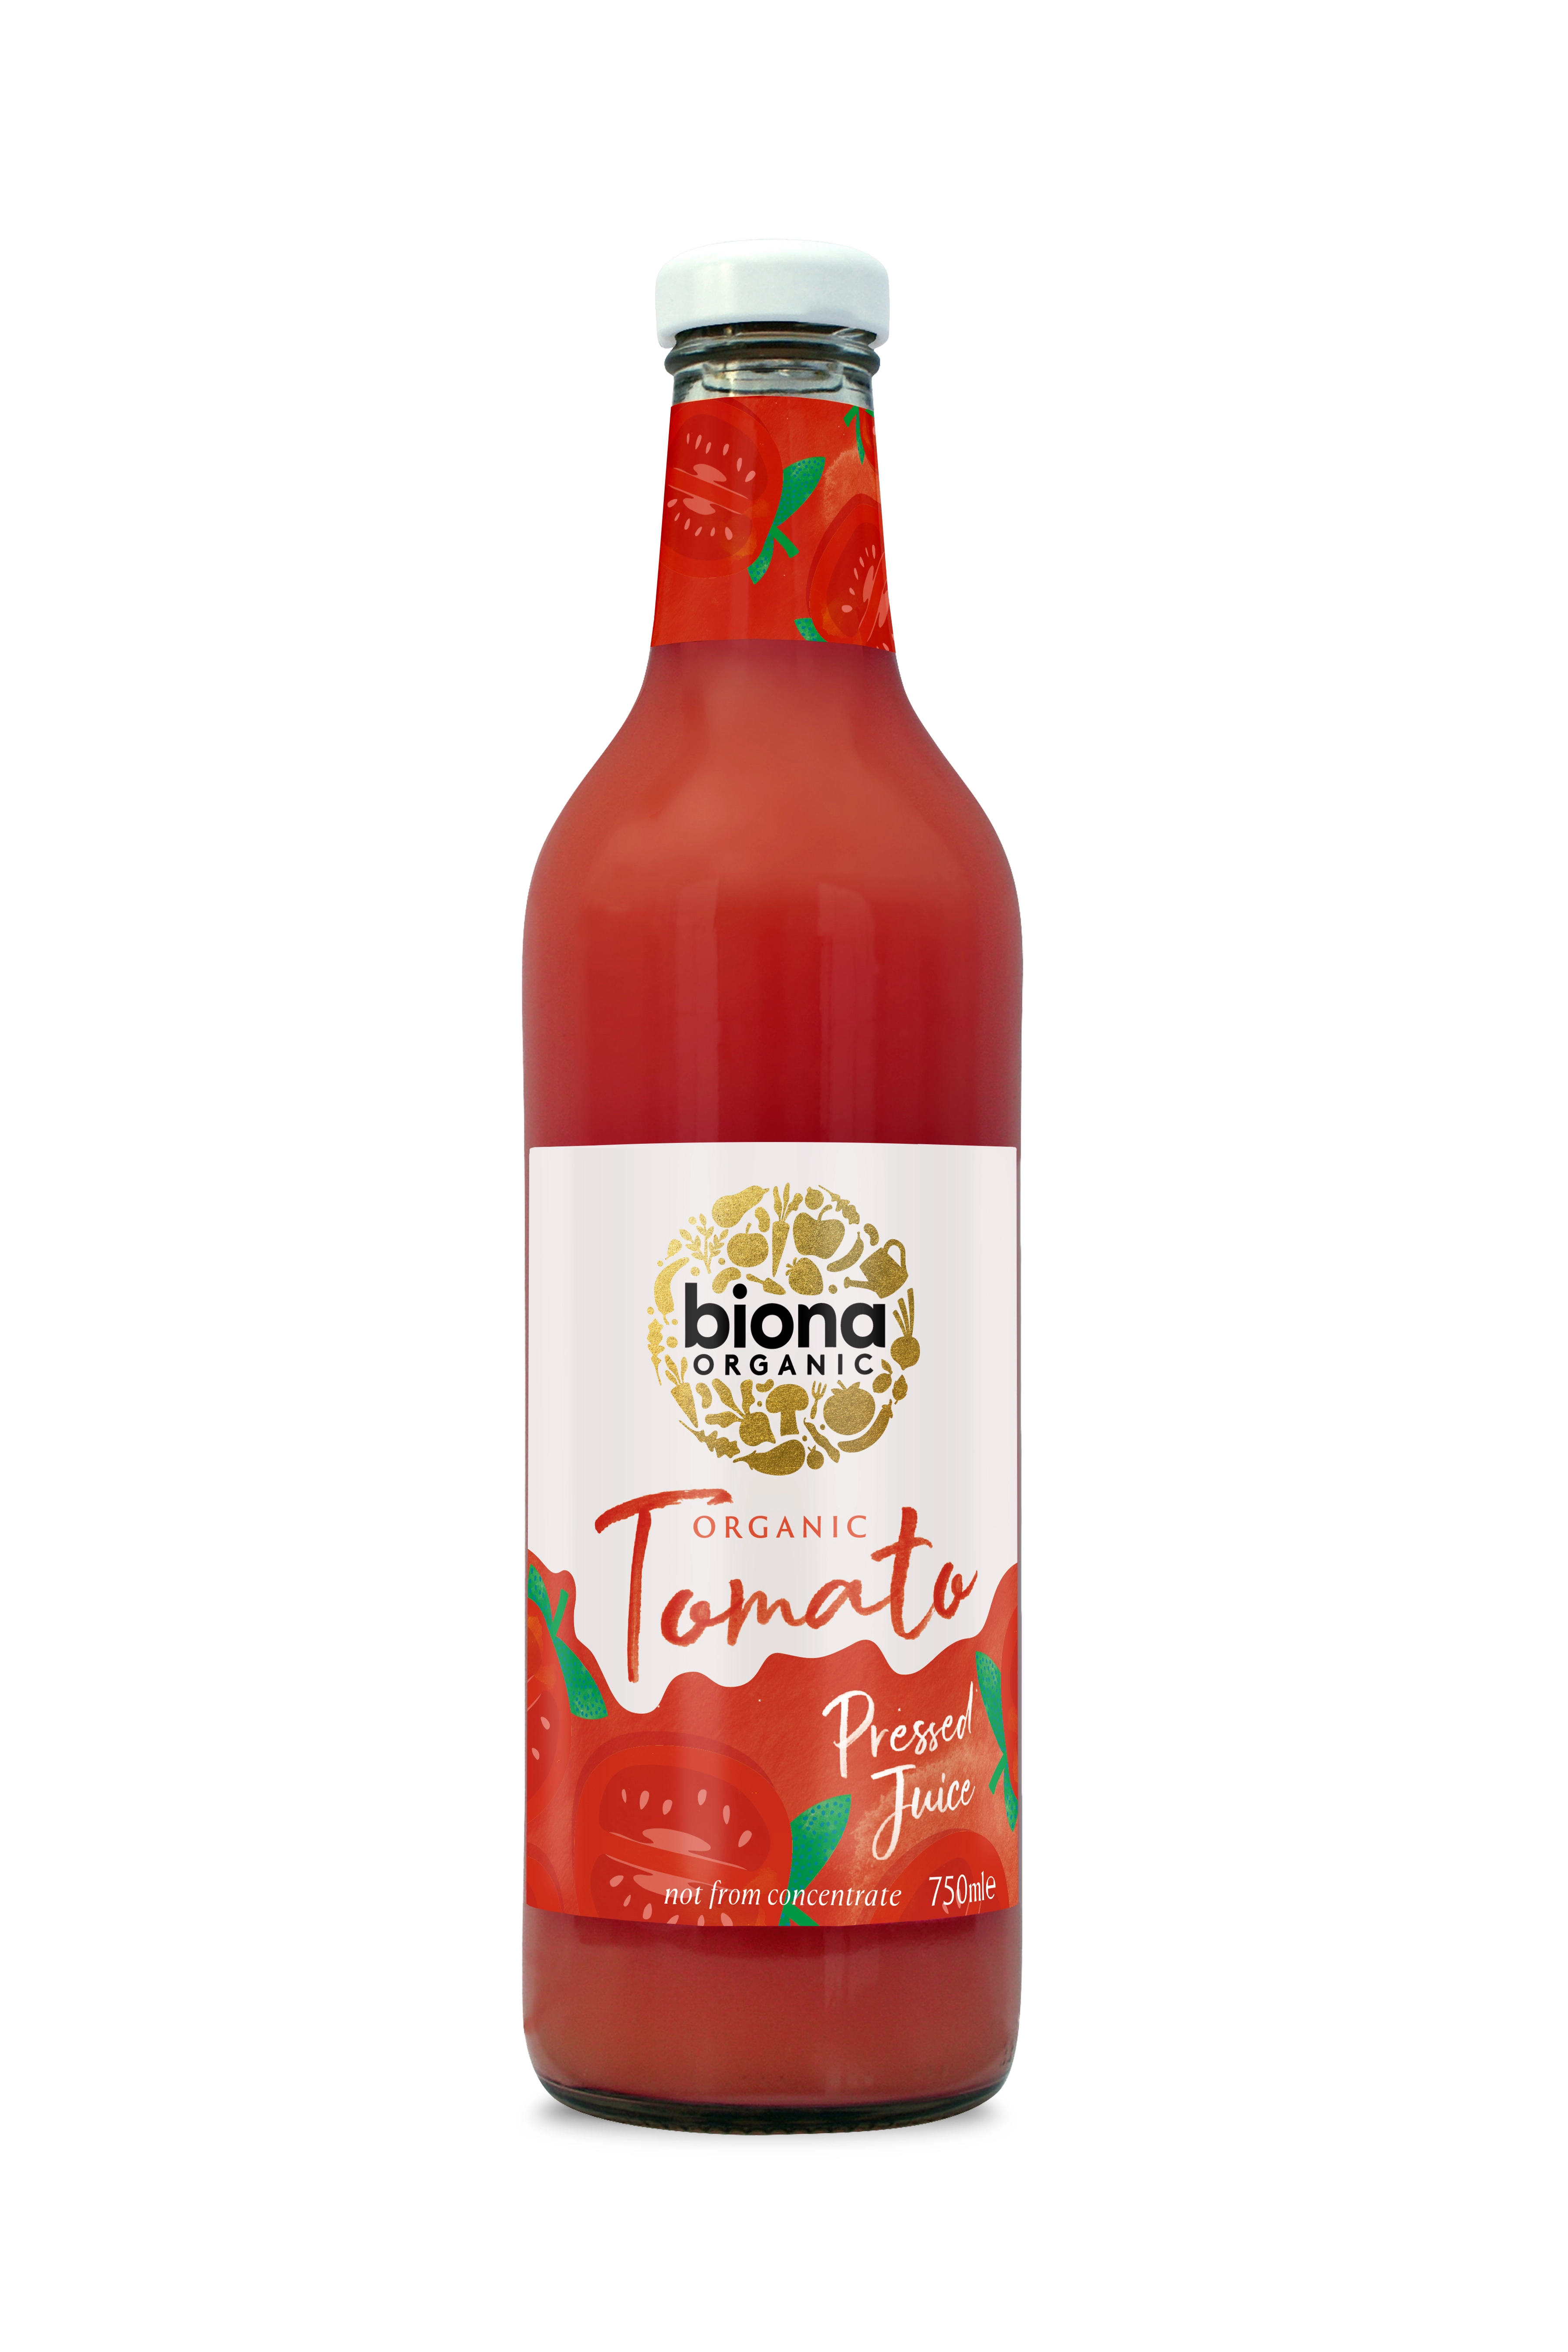 Biona Organic Tomato Juice pressed 750ml